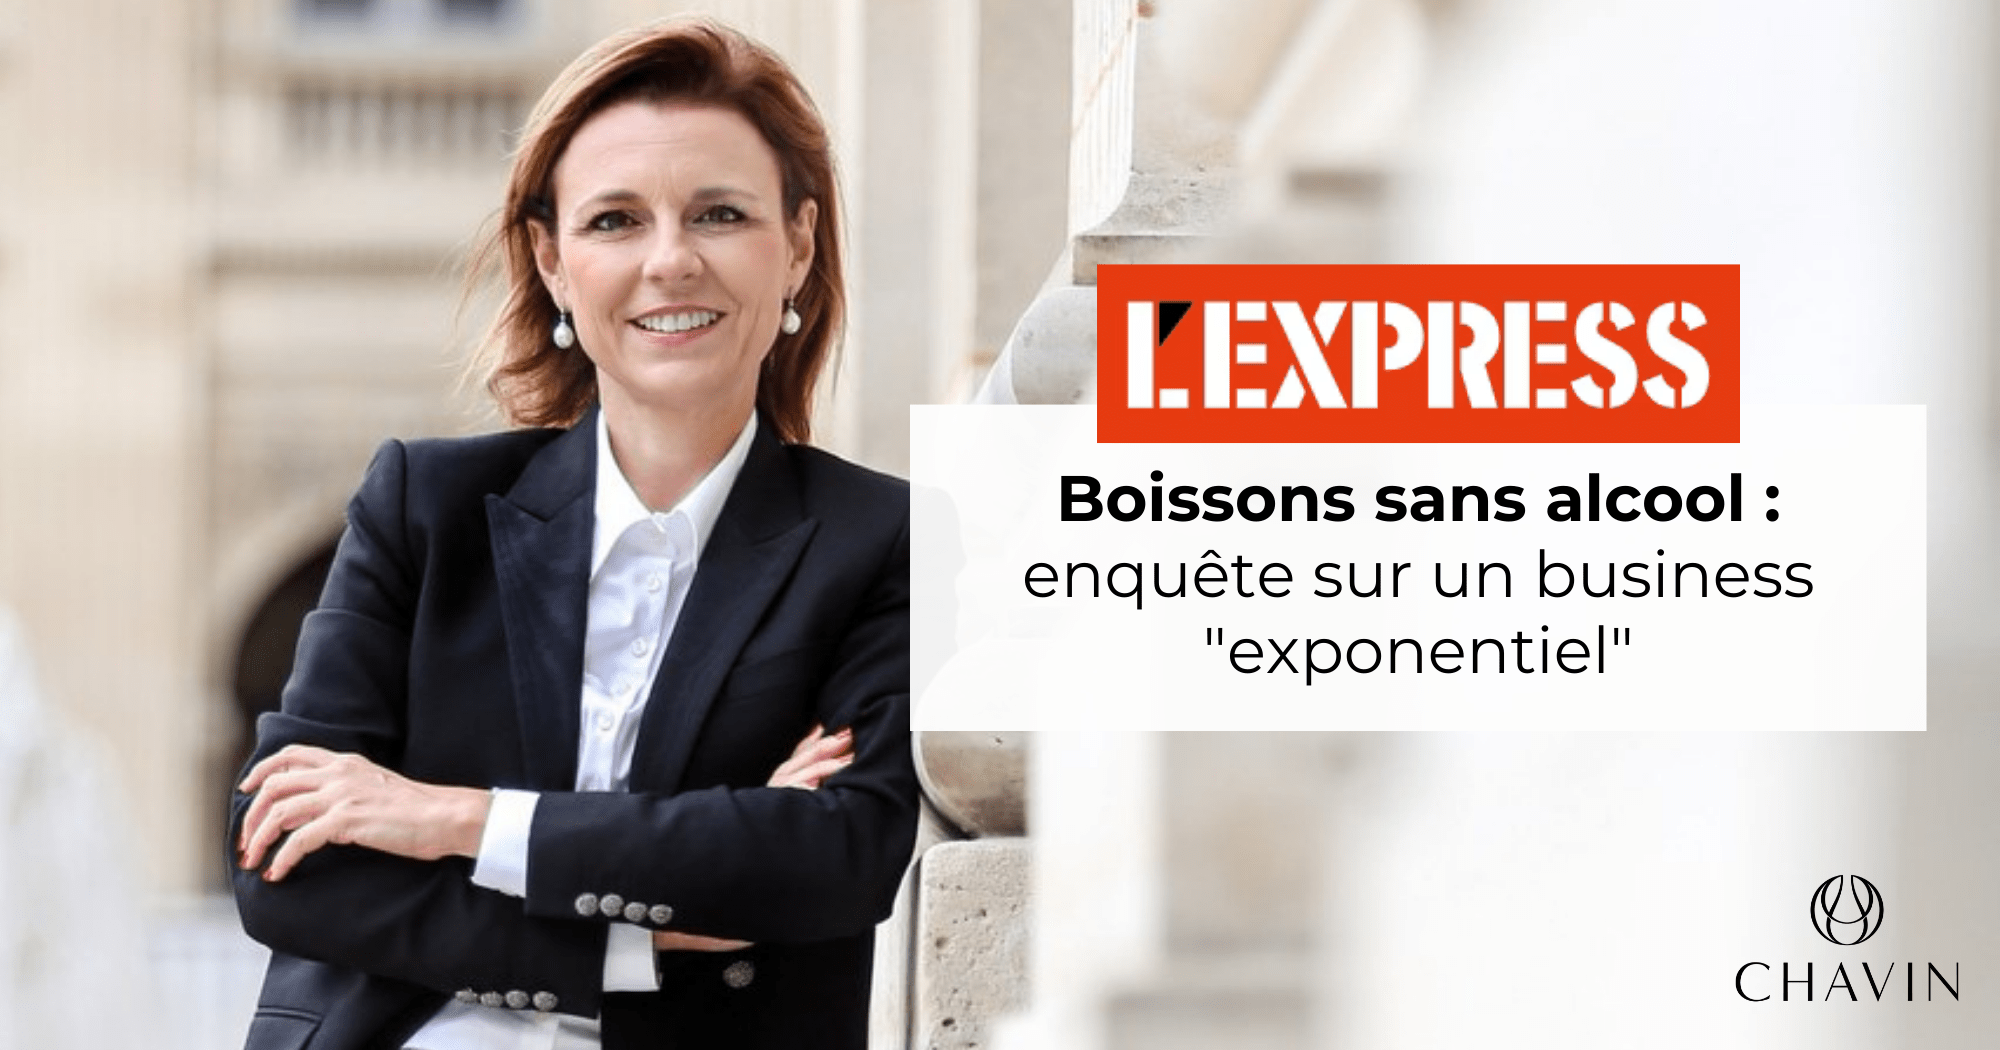 Chavin - Mathilde BOULACHIN interviewed by L’EXPRESS